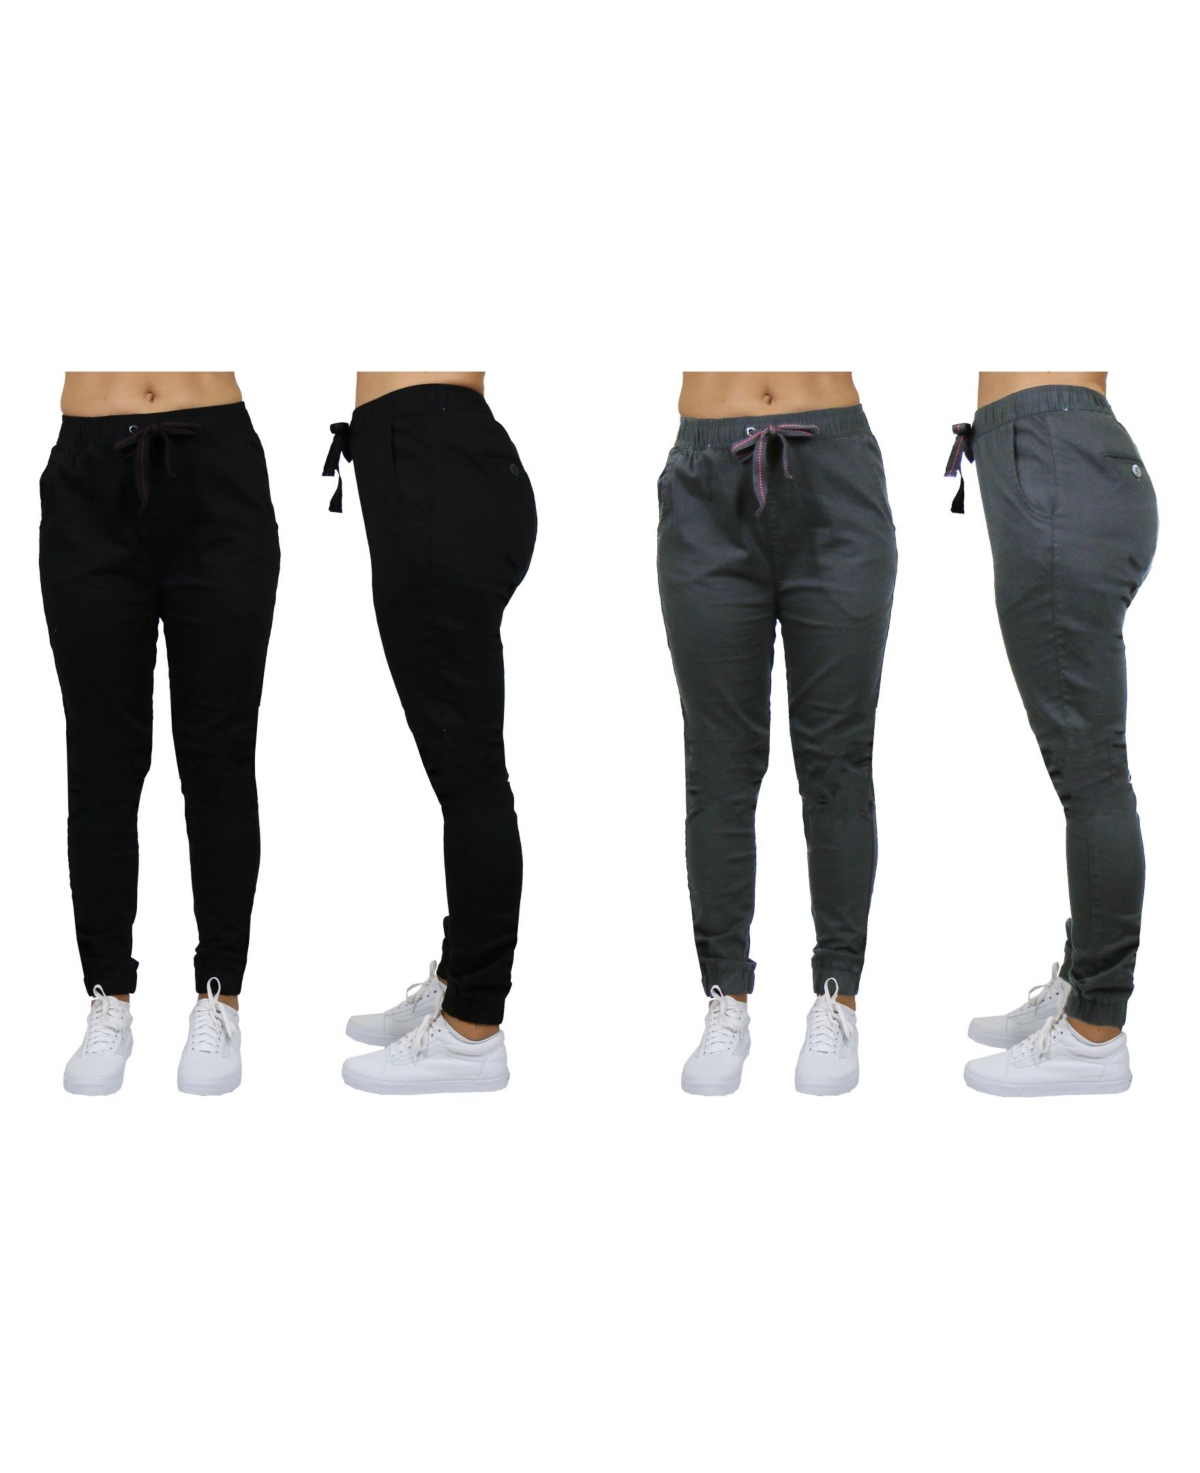 Women's Basic Stretch Twill Joggers, Pack of 2 - Dark Grey-Khaki